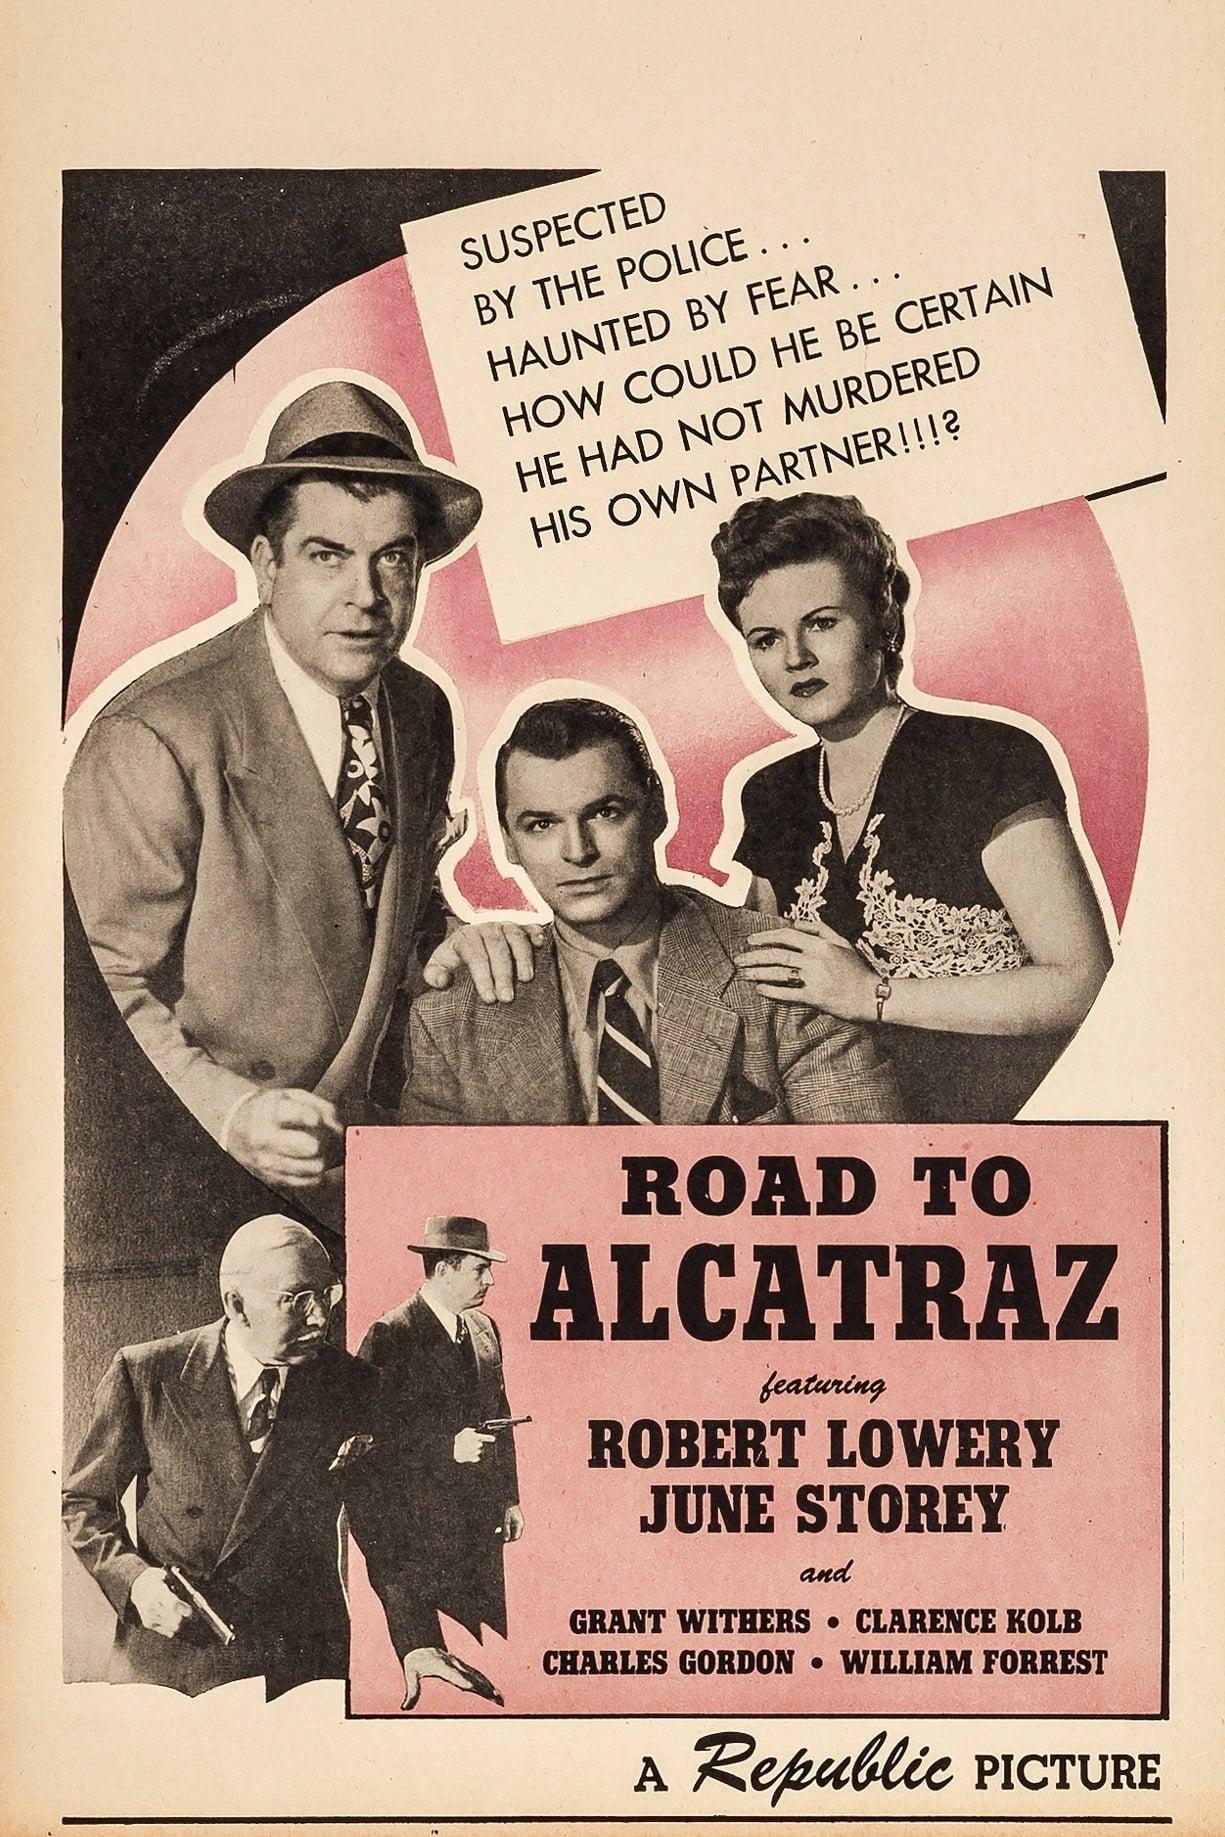 Road to Alcatraz poster